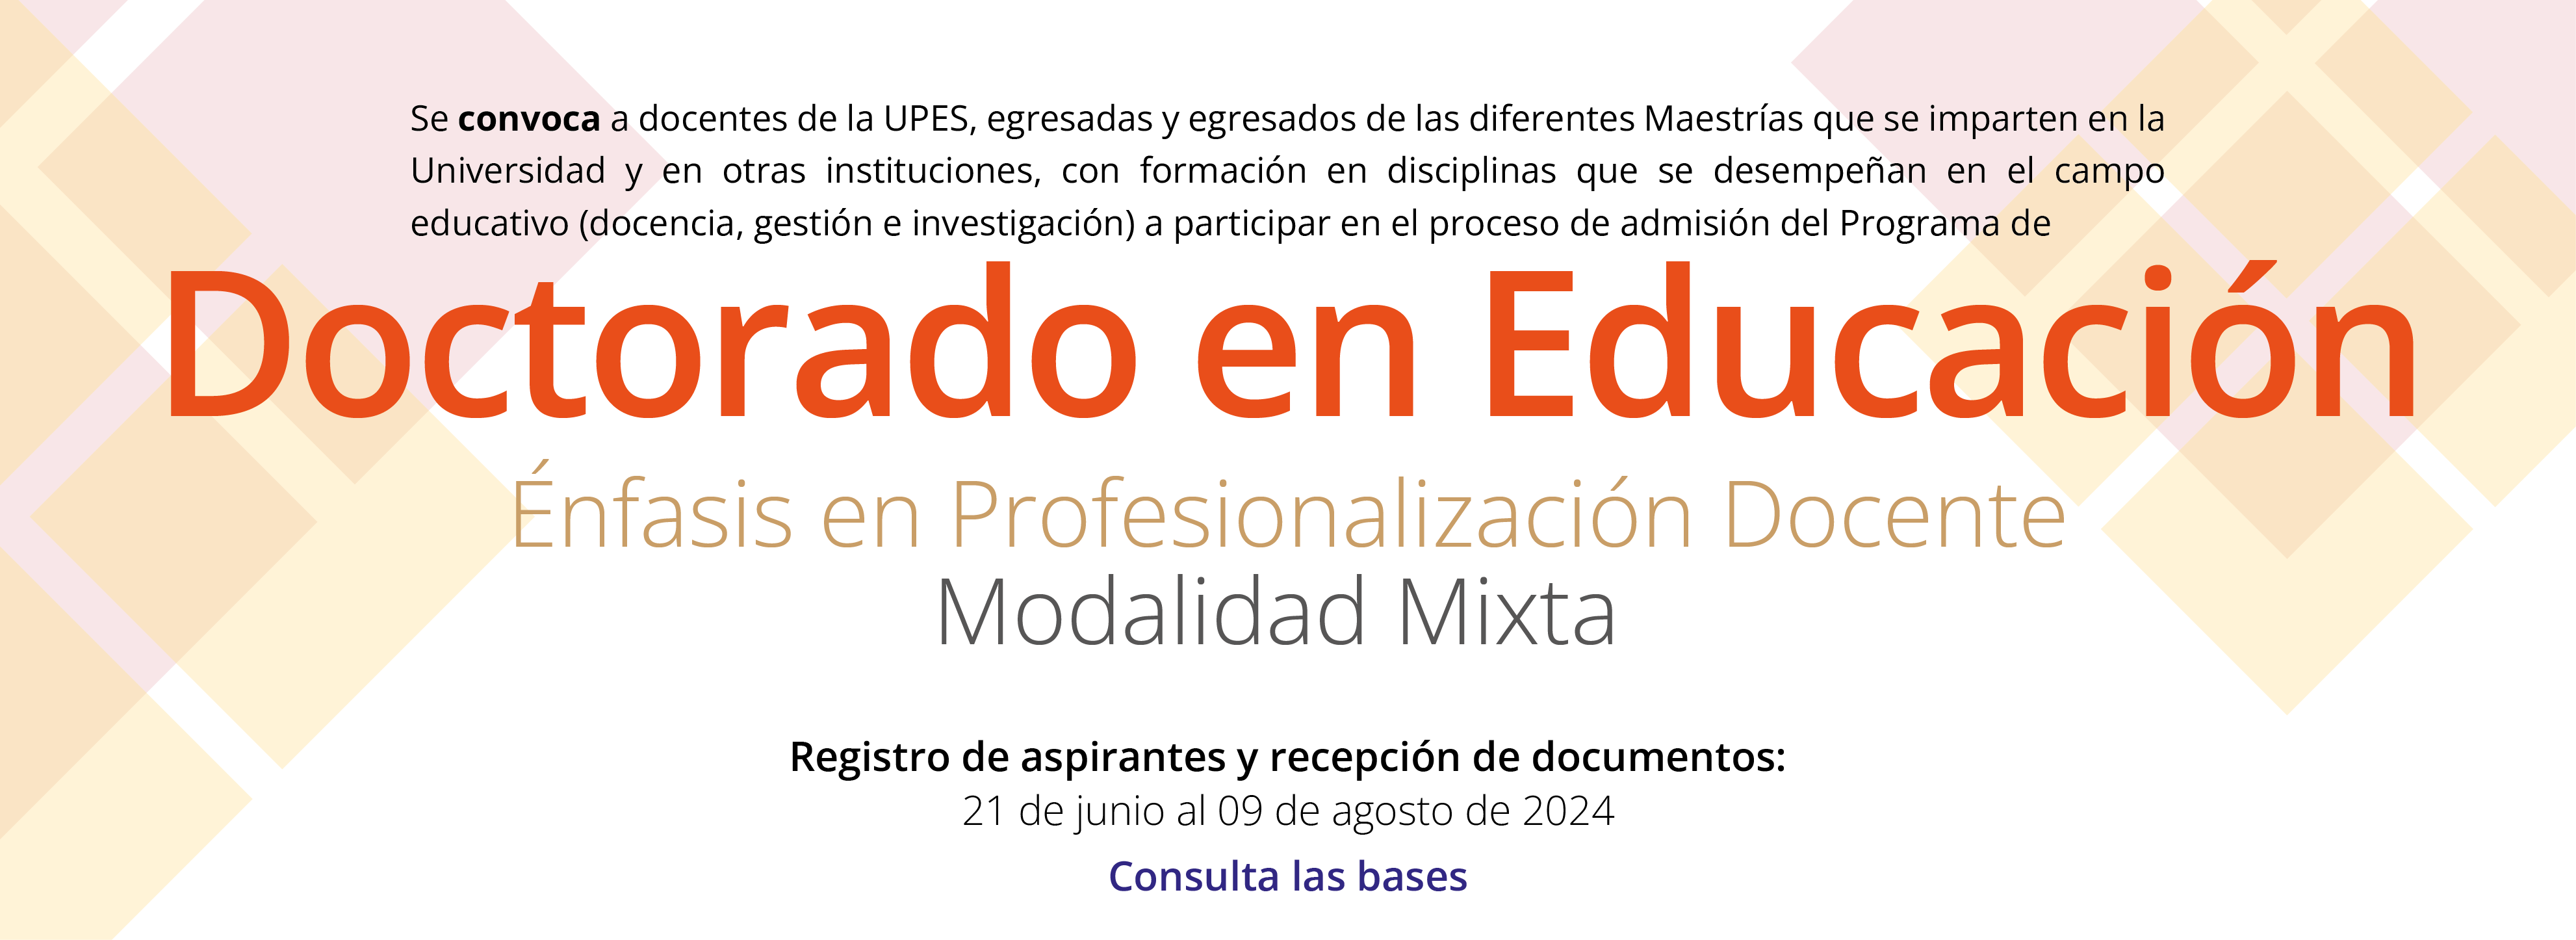 Convocatoria_Doctorado_en_Educacion_Culiacan_2024_banner_web